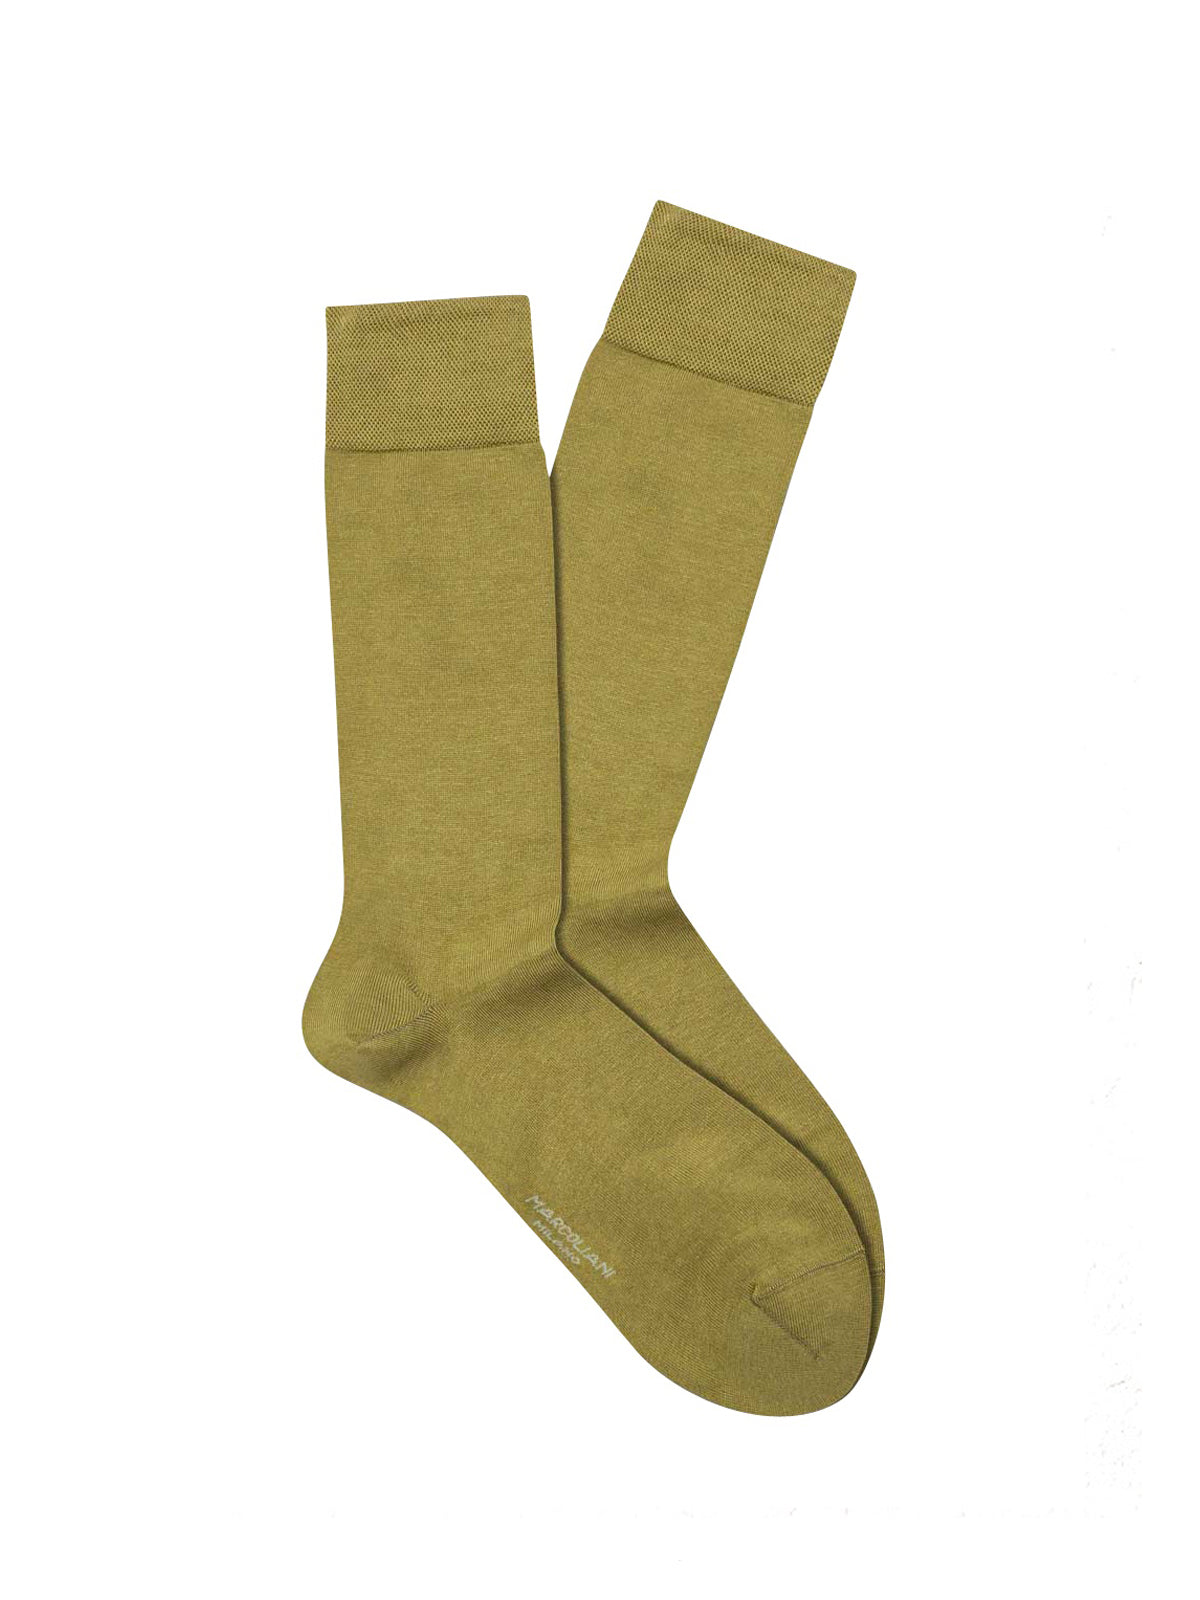 Marcoliani Pima Cotton Classic Plain Khaki Socks